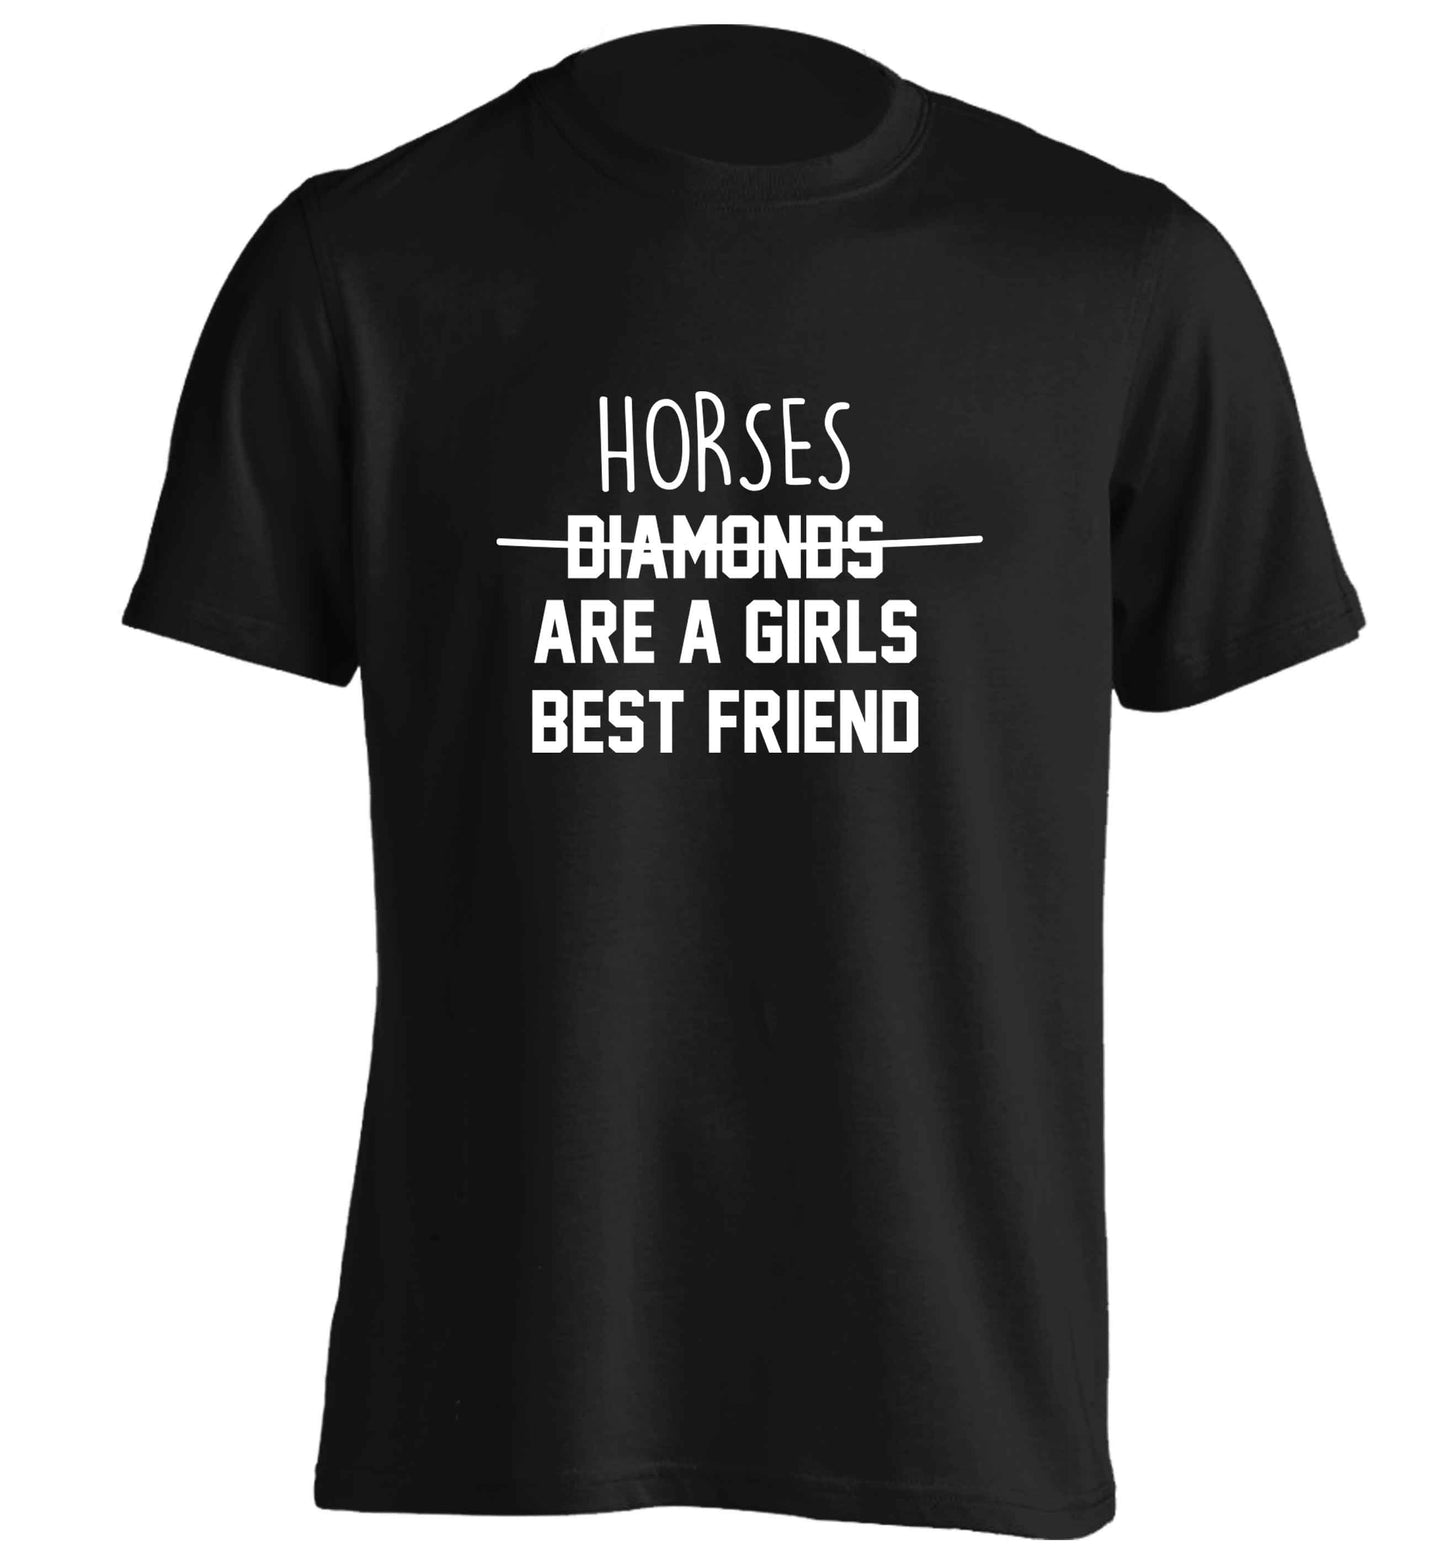 Horses are a girls best friend adults unisex black Tshirt 2XL